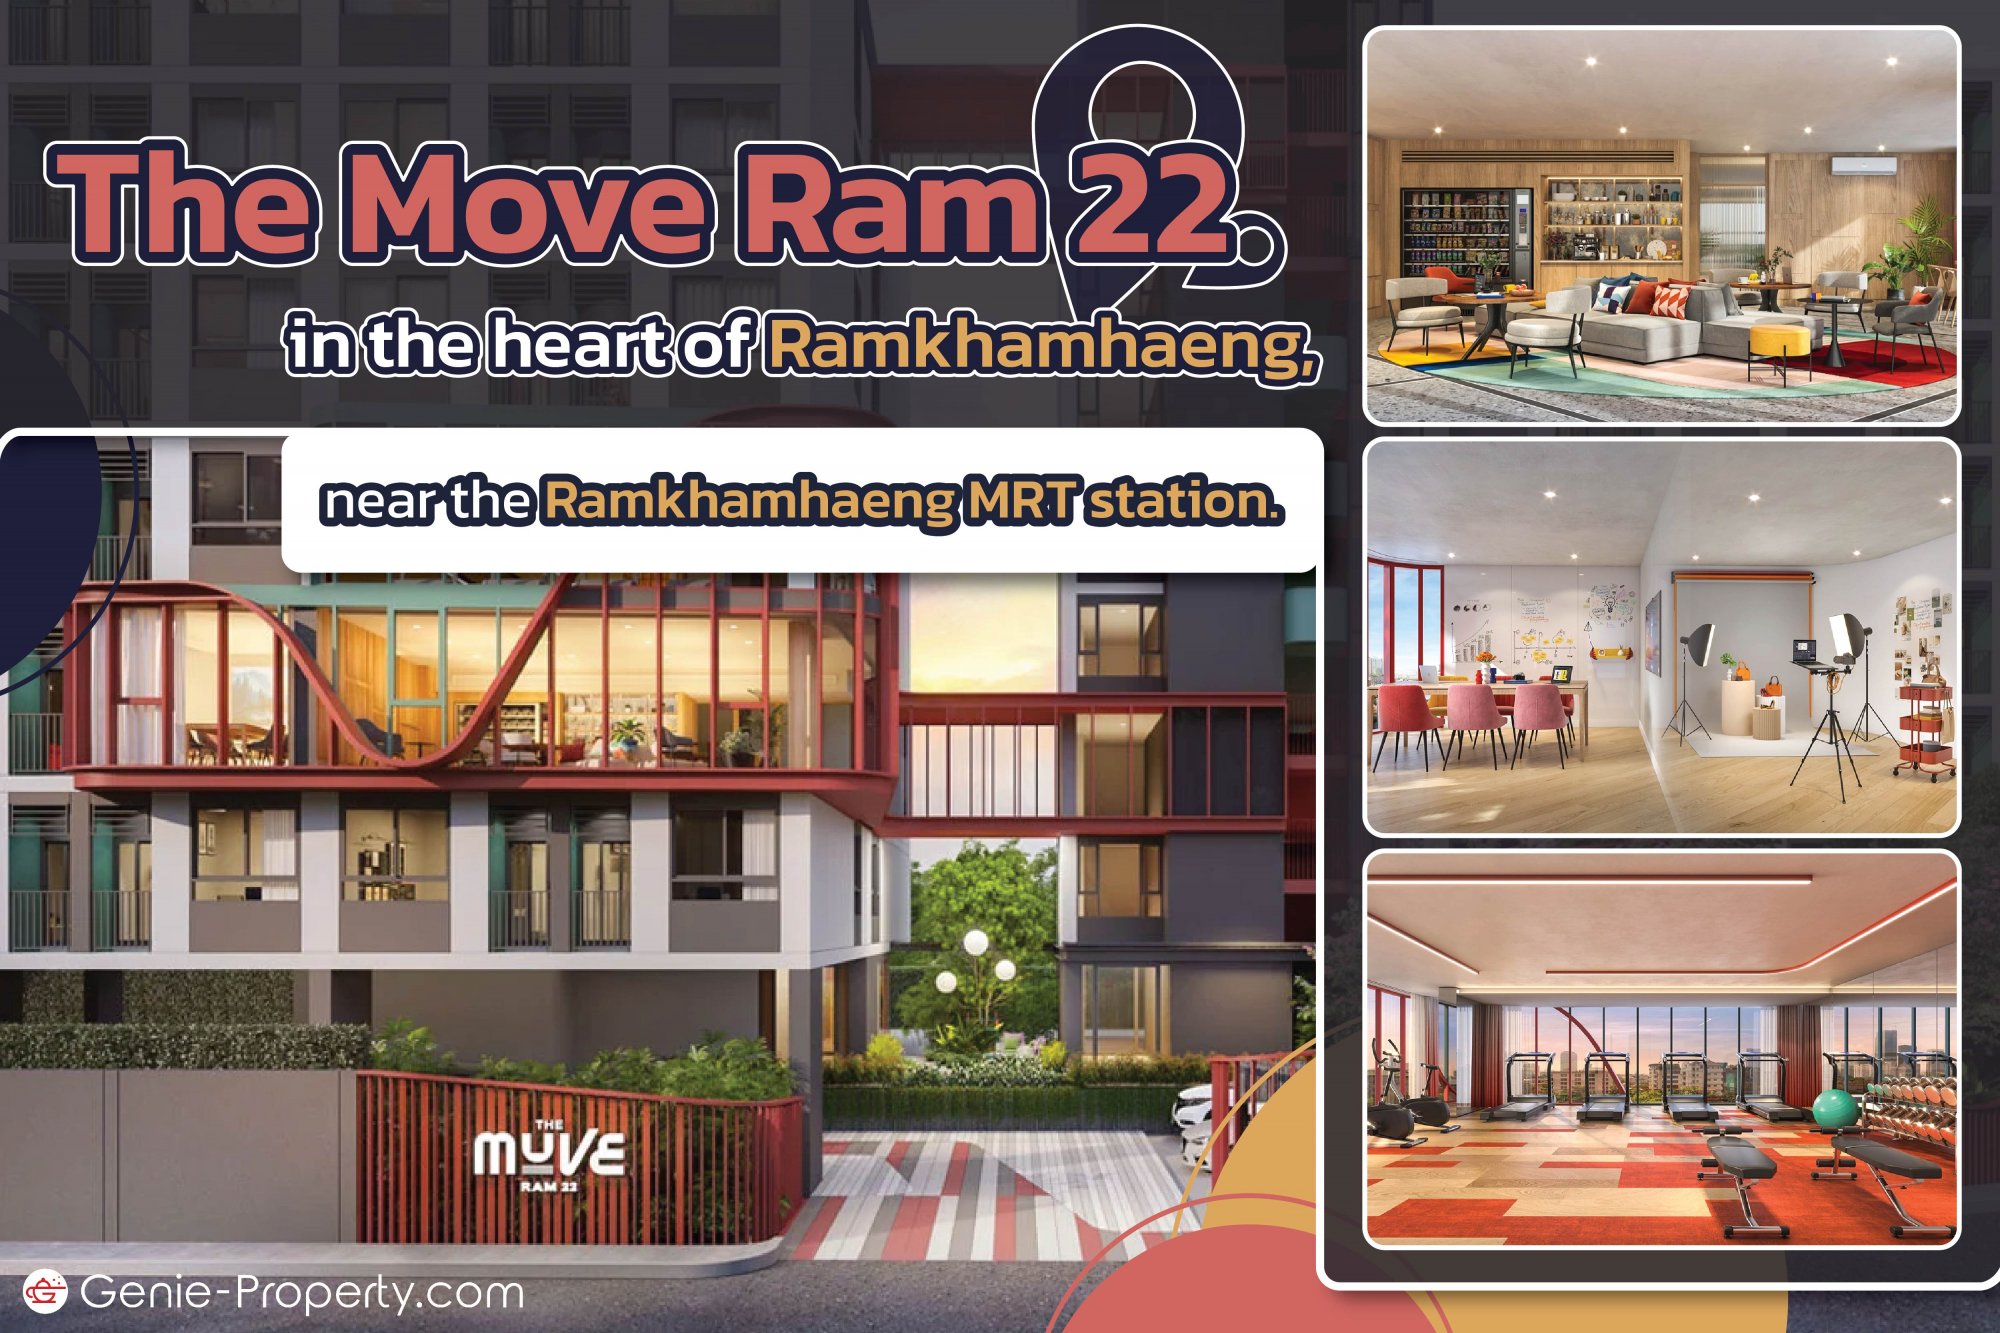 image for The Muve Ram 22 is located in the heart of Ramkhamhaeng, near the Ramkhamhaeng MRT station.